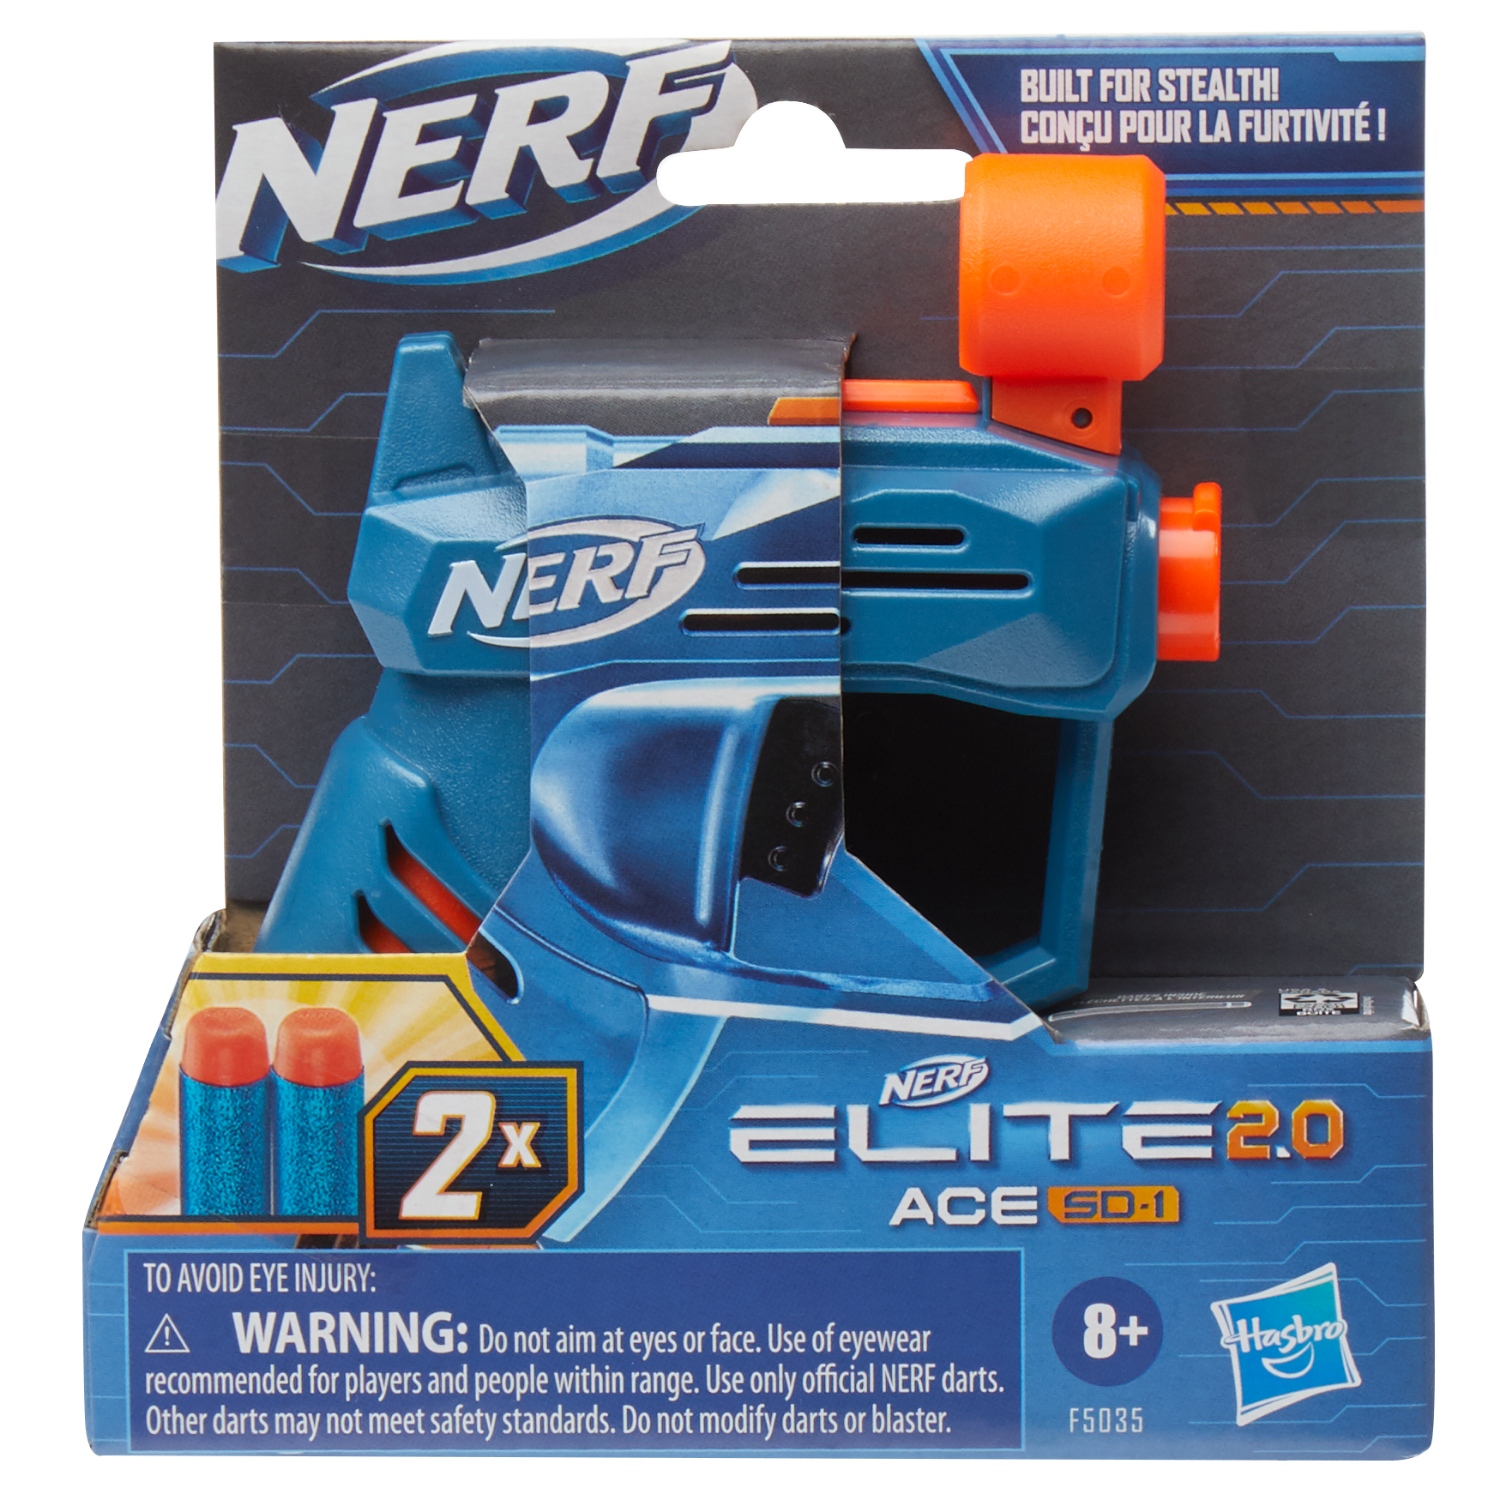 Nerf Elite 2.0 Ace Sd-1